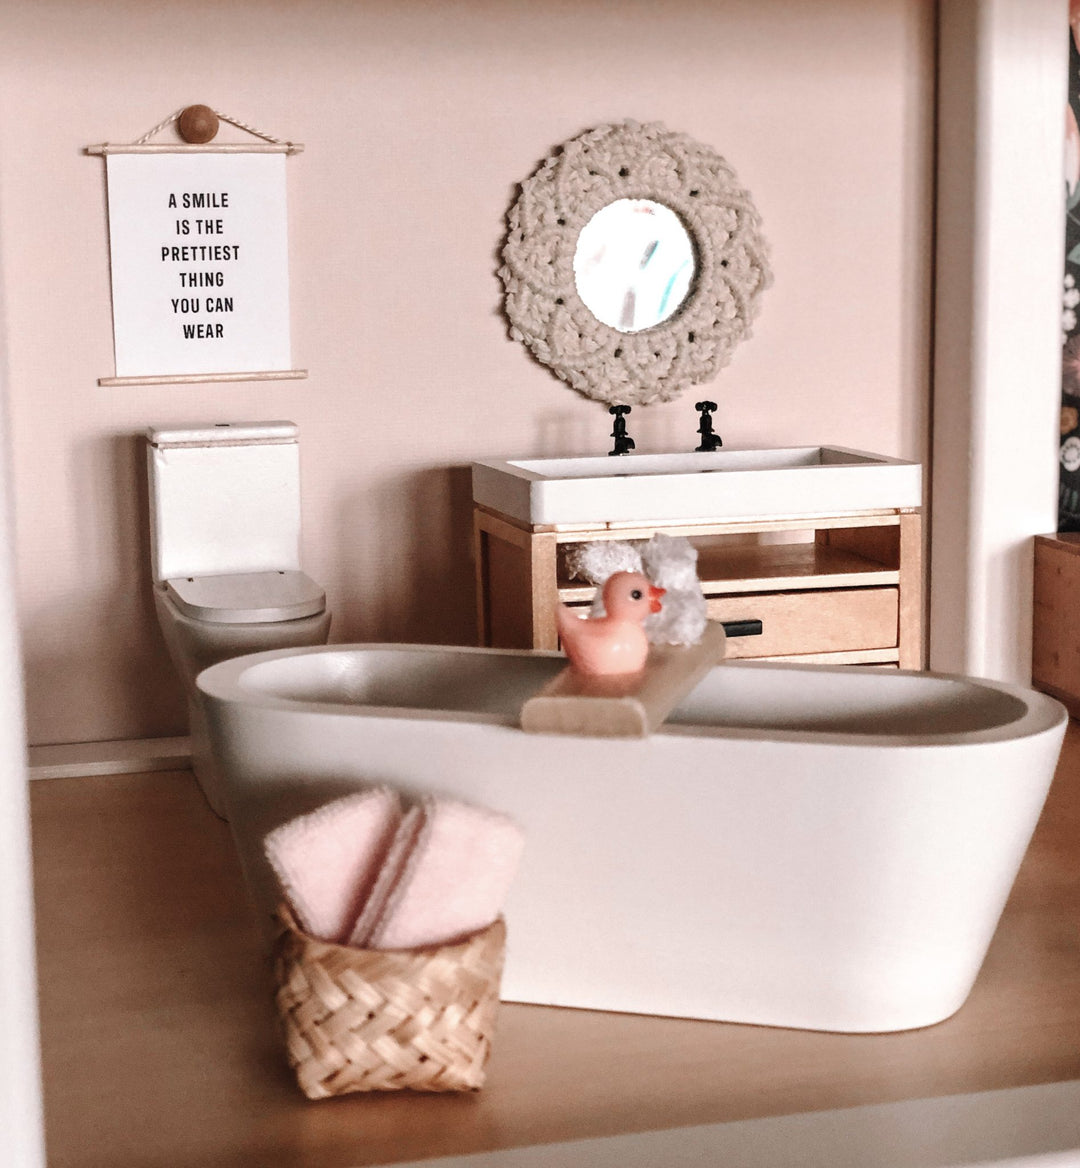 Oval Soaking Bath Tub | White